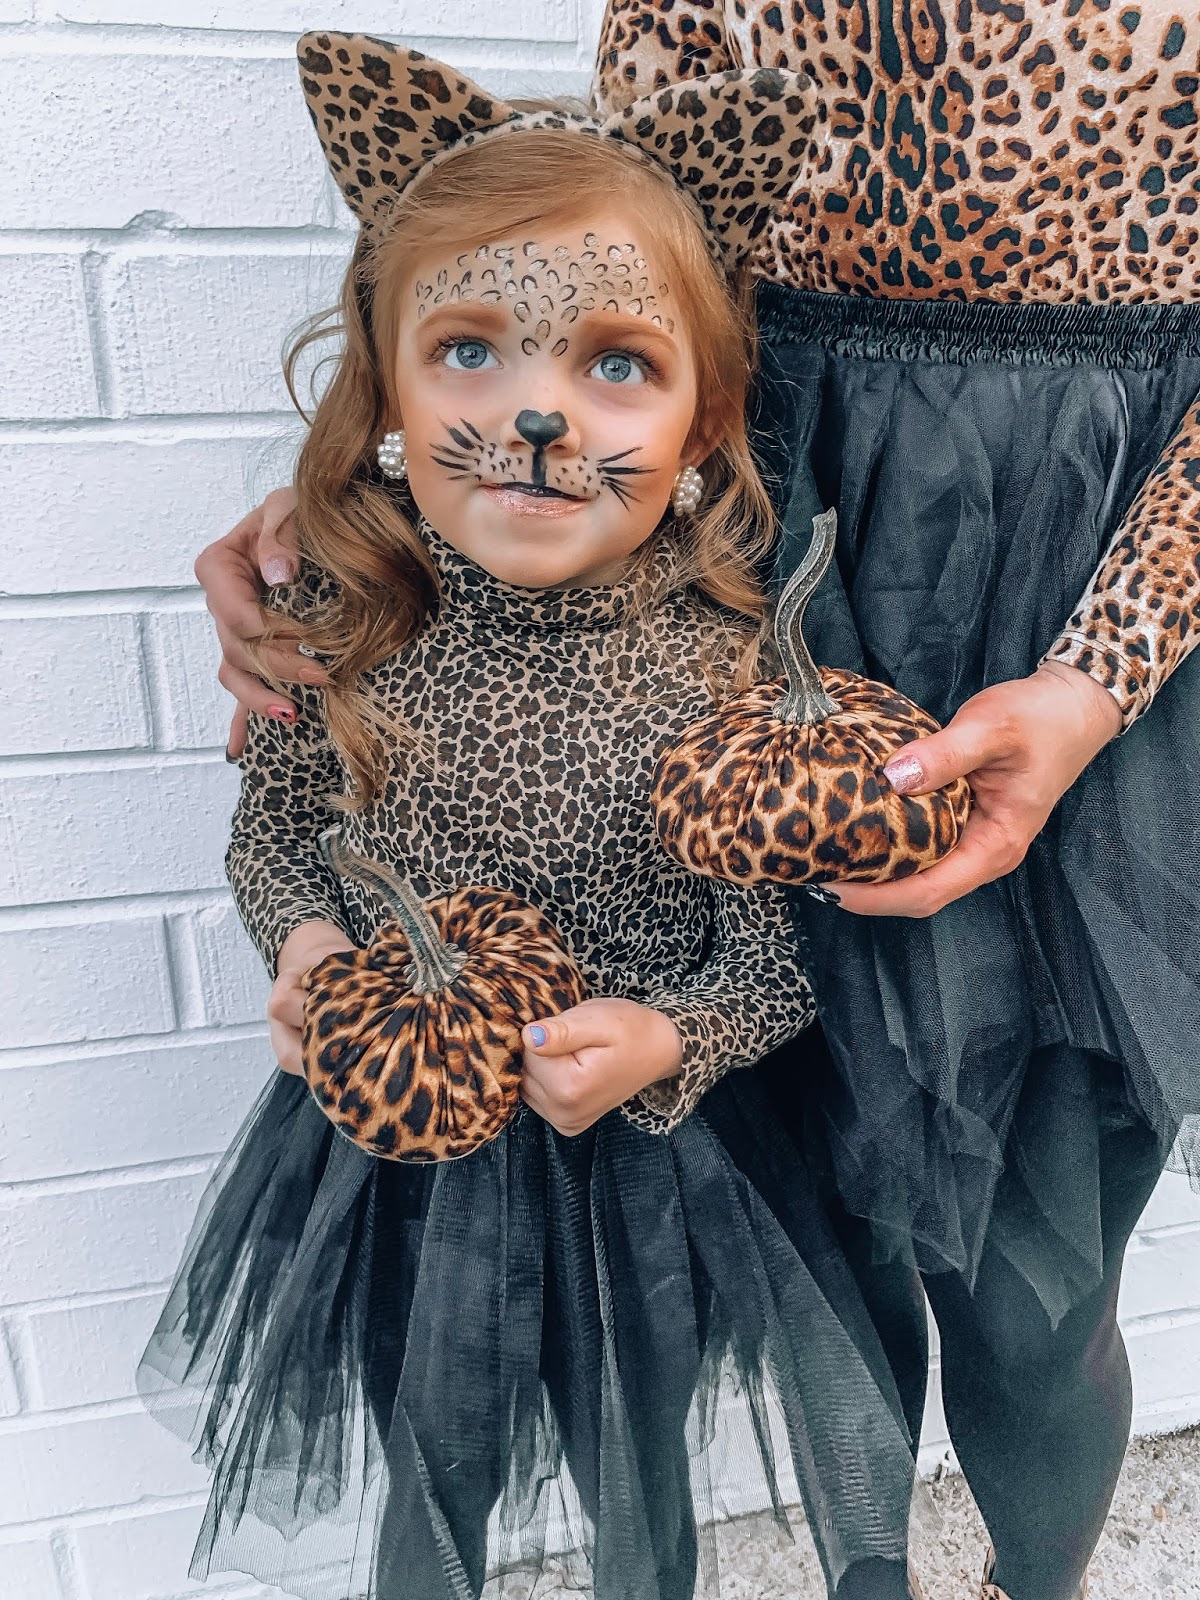 Mommy & Me Halloween Costume Ideas: DIY Leopard Costumes - Something Delightful Blog #leopardcostumes #HalloweenDIY #Mommyandmehalloween #mommyandmecostumes #DIYCostumes #Halloween2019